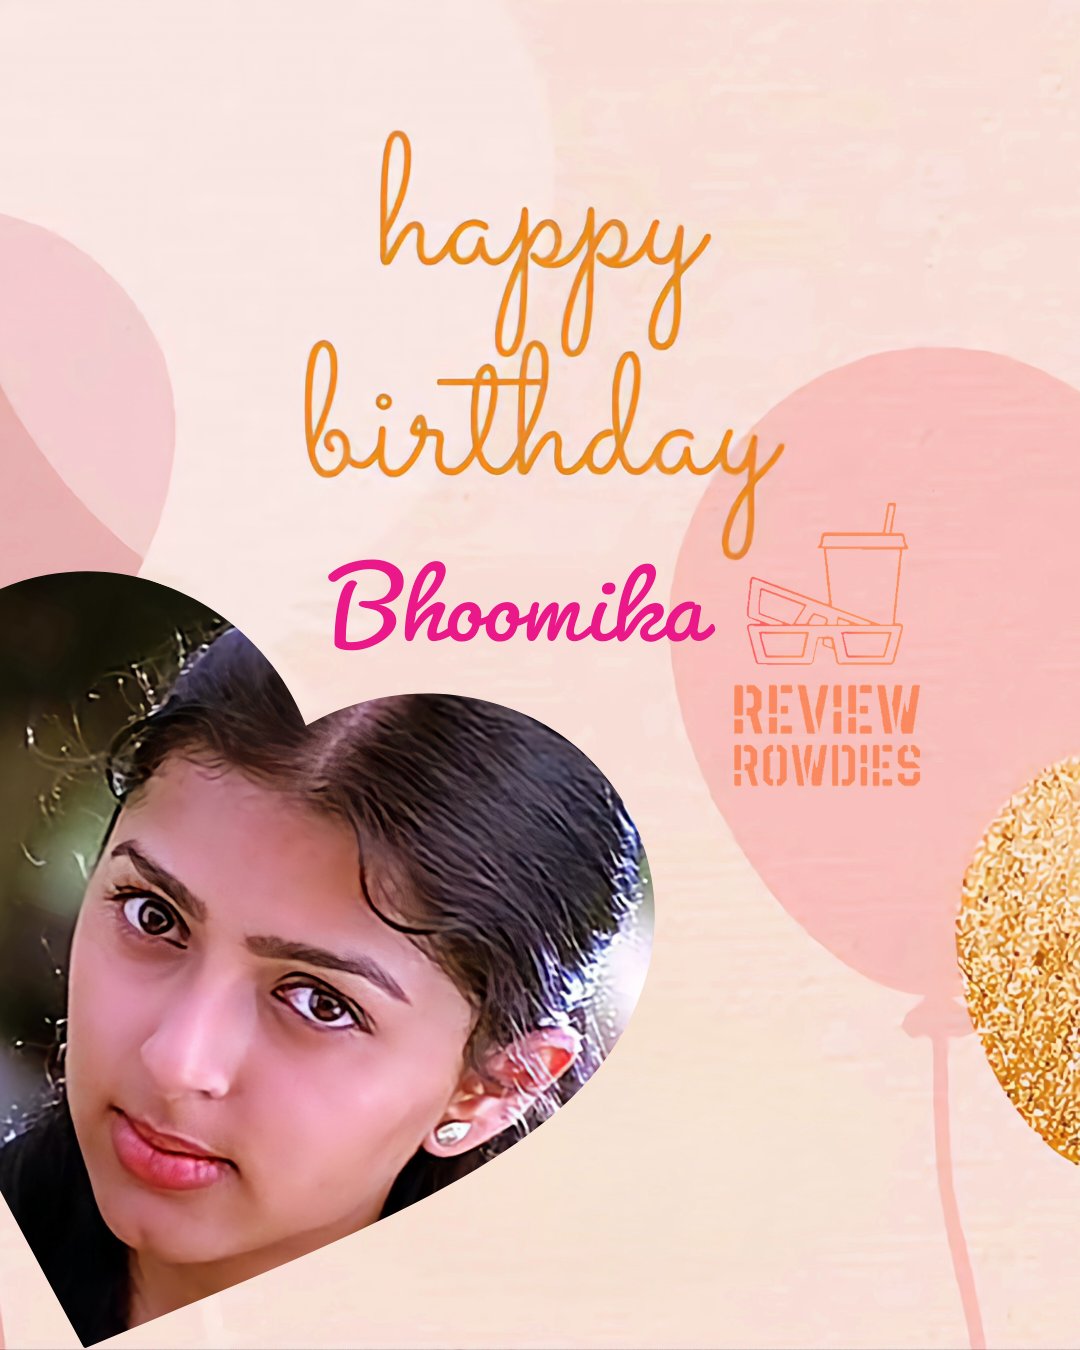 Wishing Actress Bhumika Chawla a Very Happy Birthday    